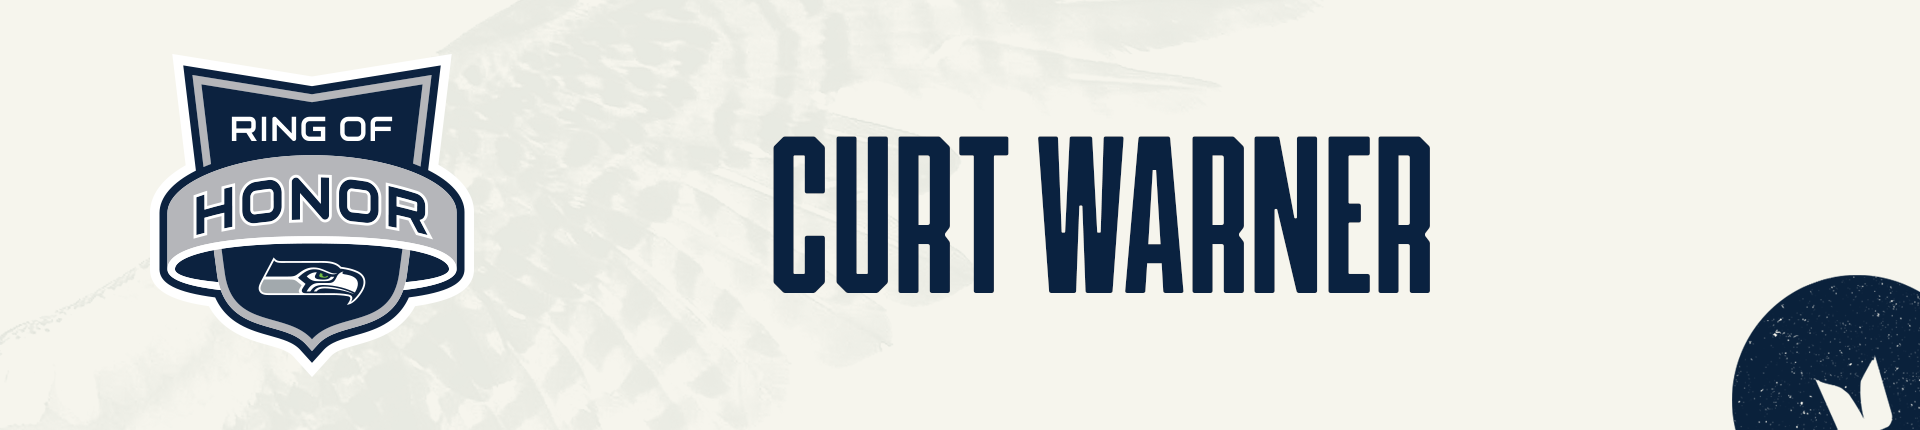 Seahawks Curt Warner Ring of Honor